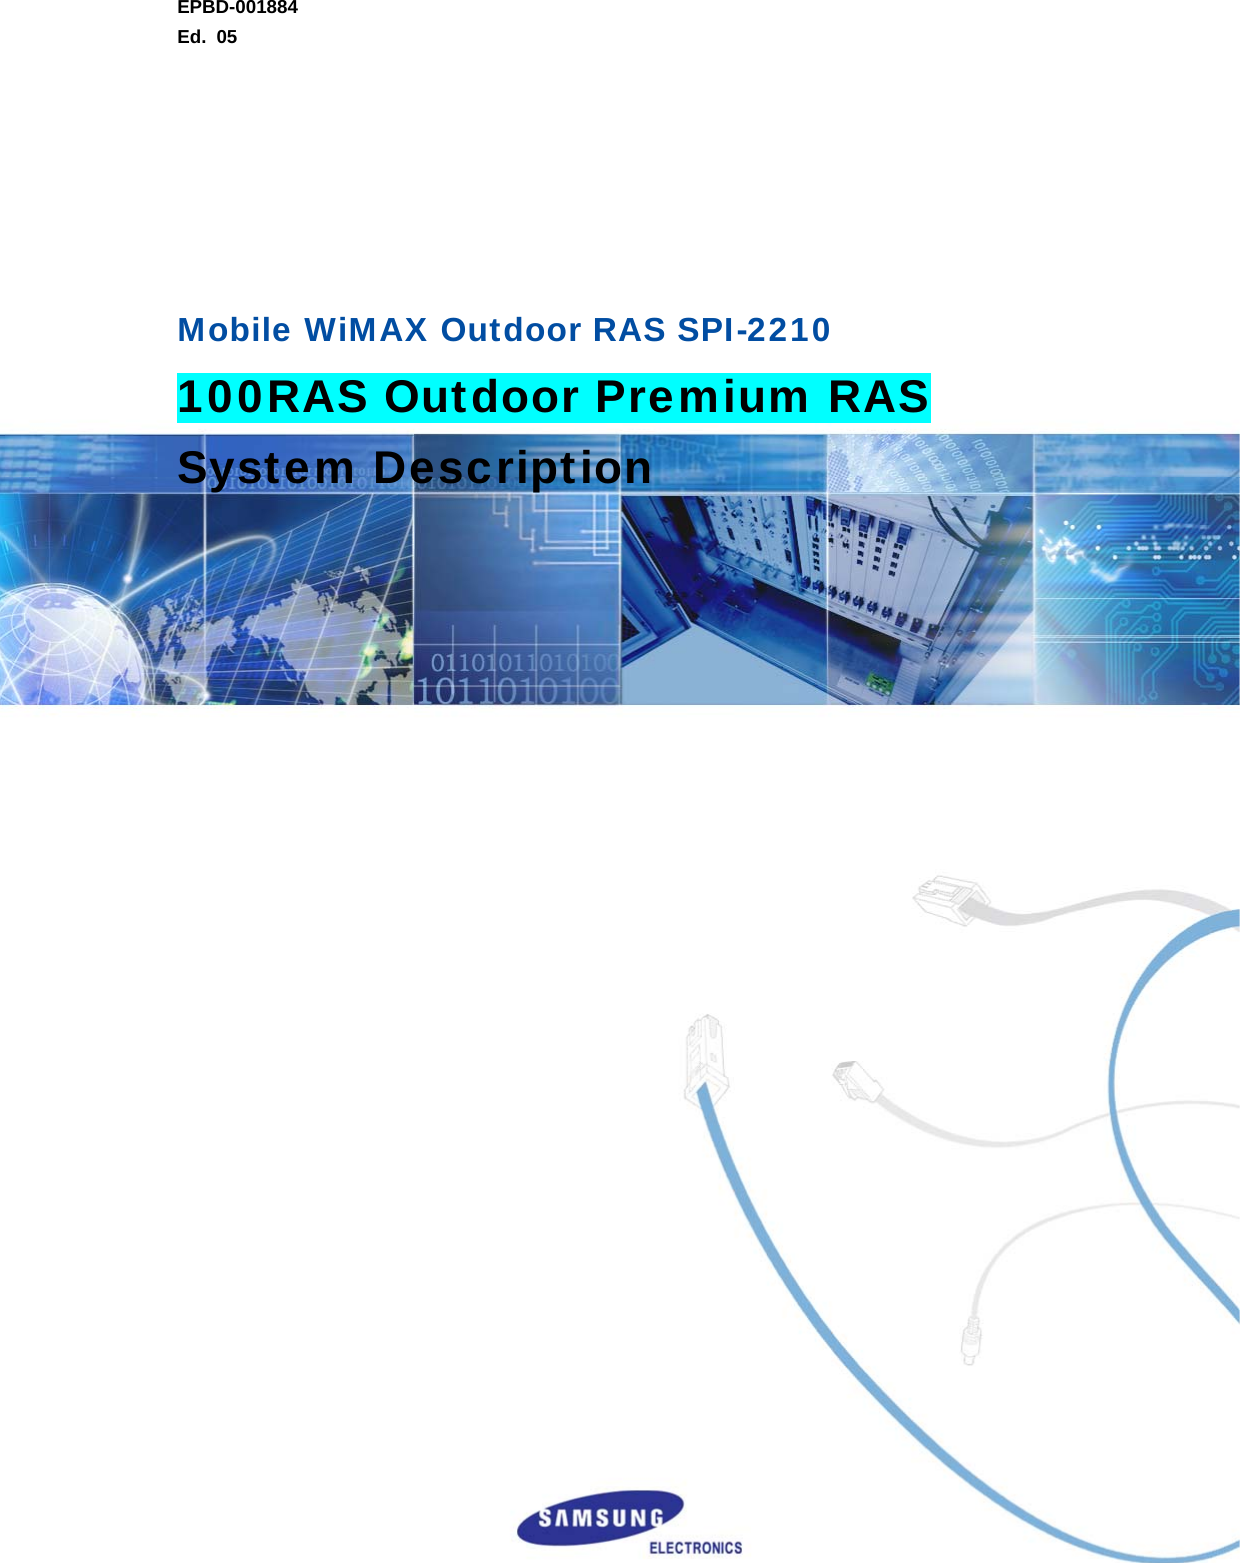 EPBD-001884 Ed. 05          Mobile WiMAX Outdoor RAS SPI-2210 100RAS Outdoor Premium RAS System Description  